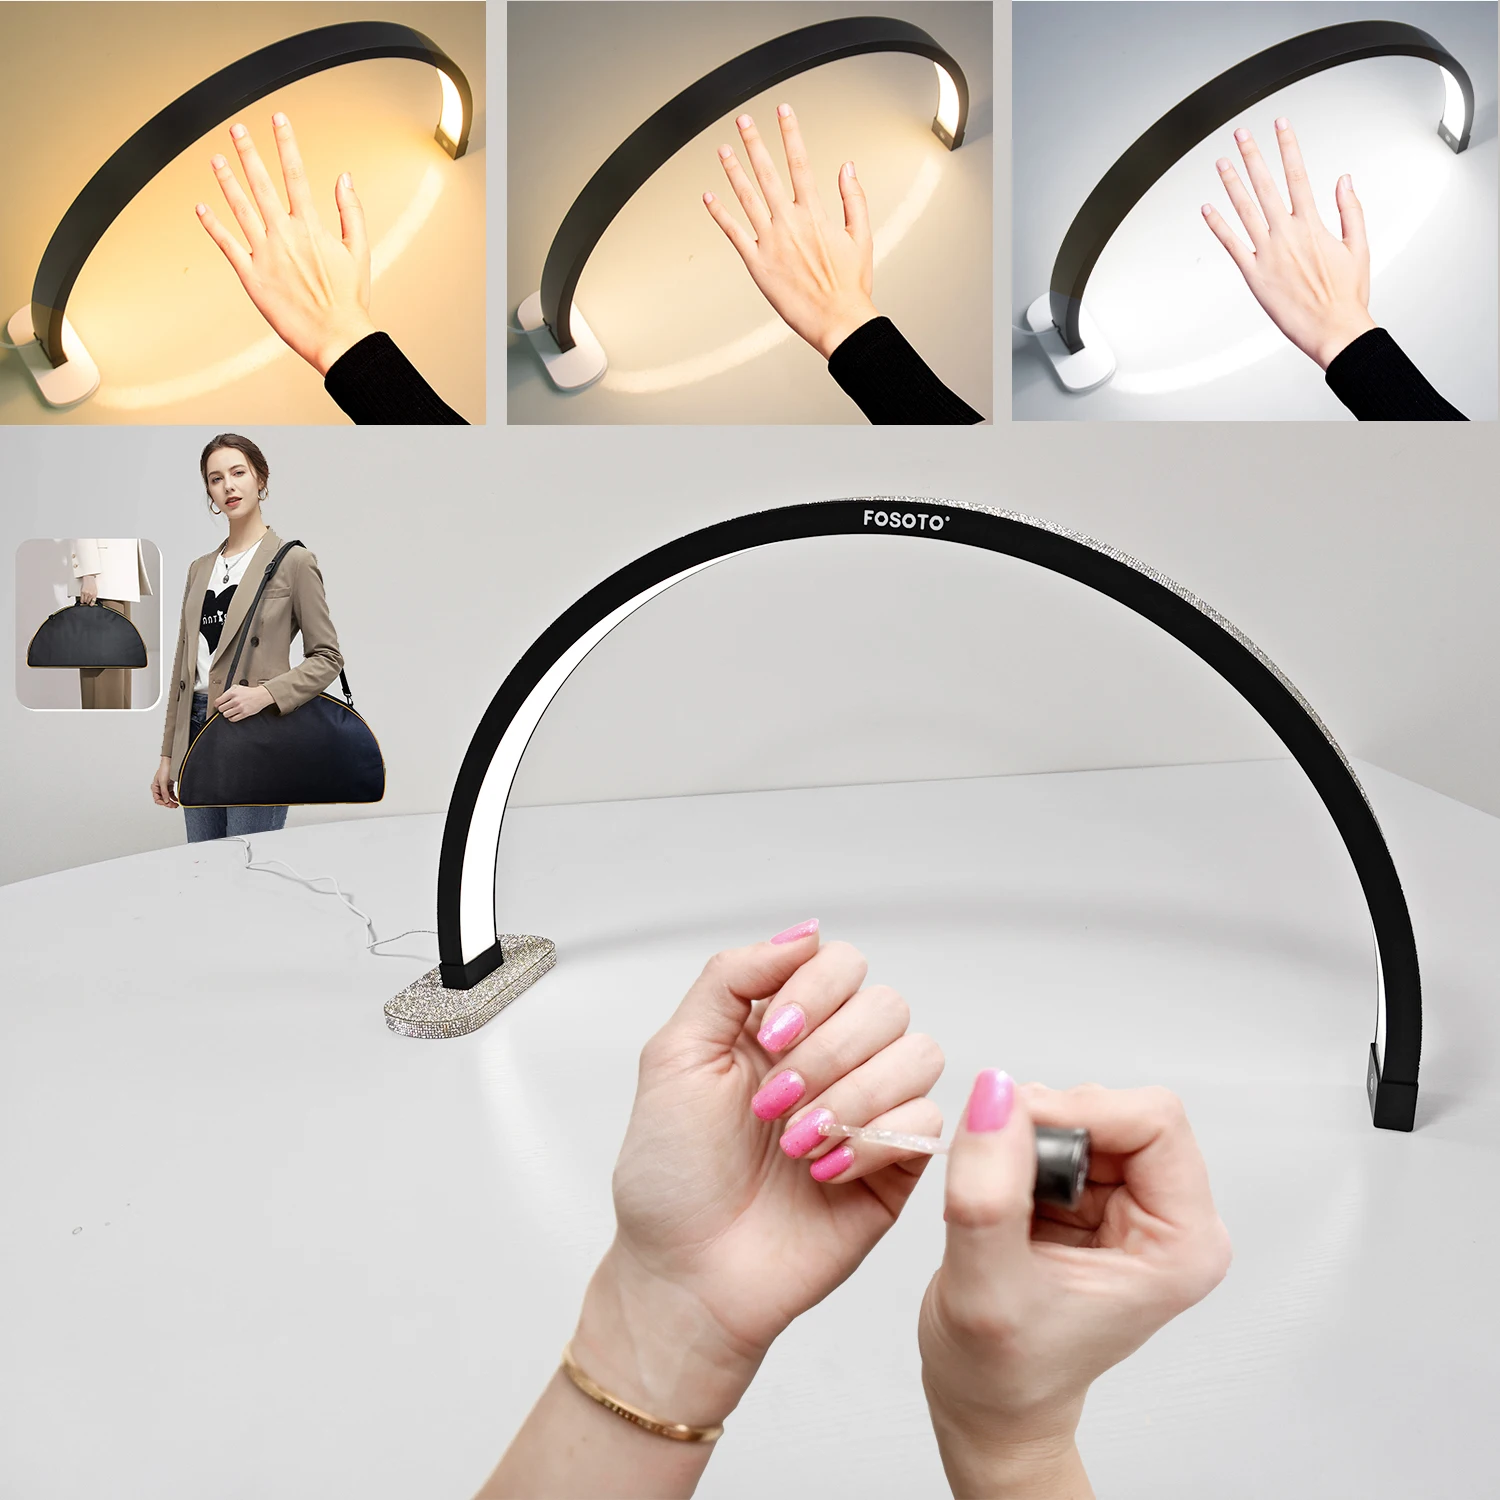 

Fosoto 30 Inch Beauty Salon Lighting Half-Moon Shaped Nails Care kit Desktop Arch Ring Led Lights Manicure Lamp Nail Art Light